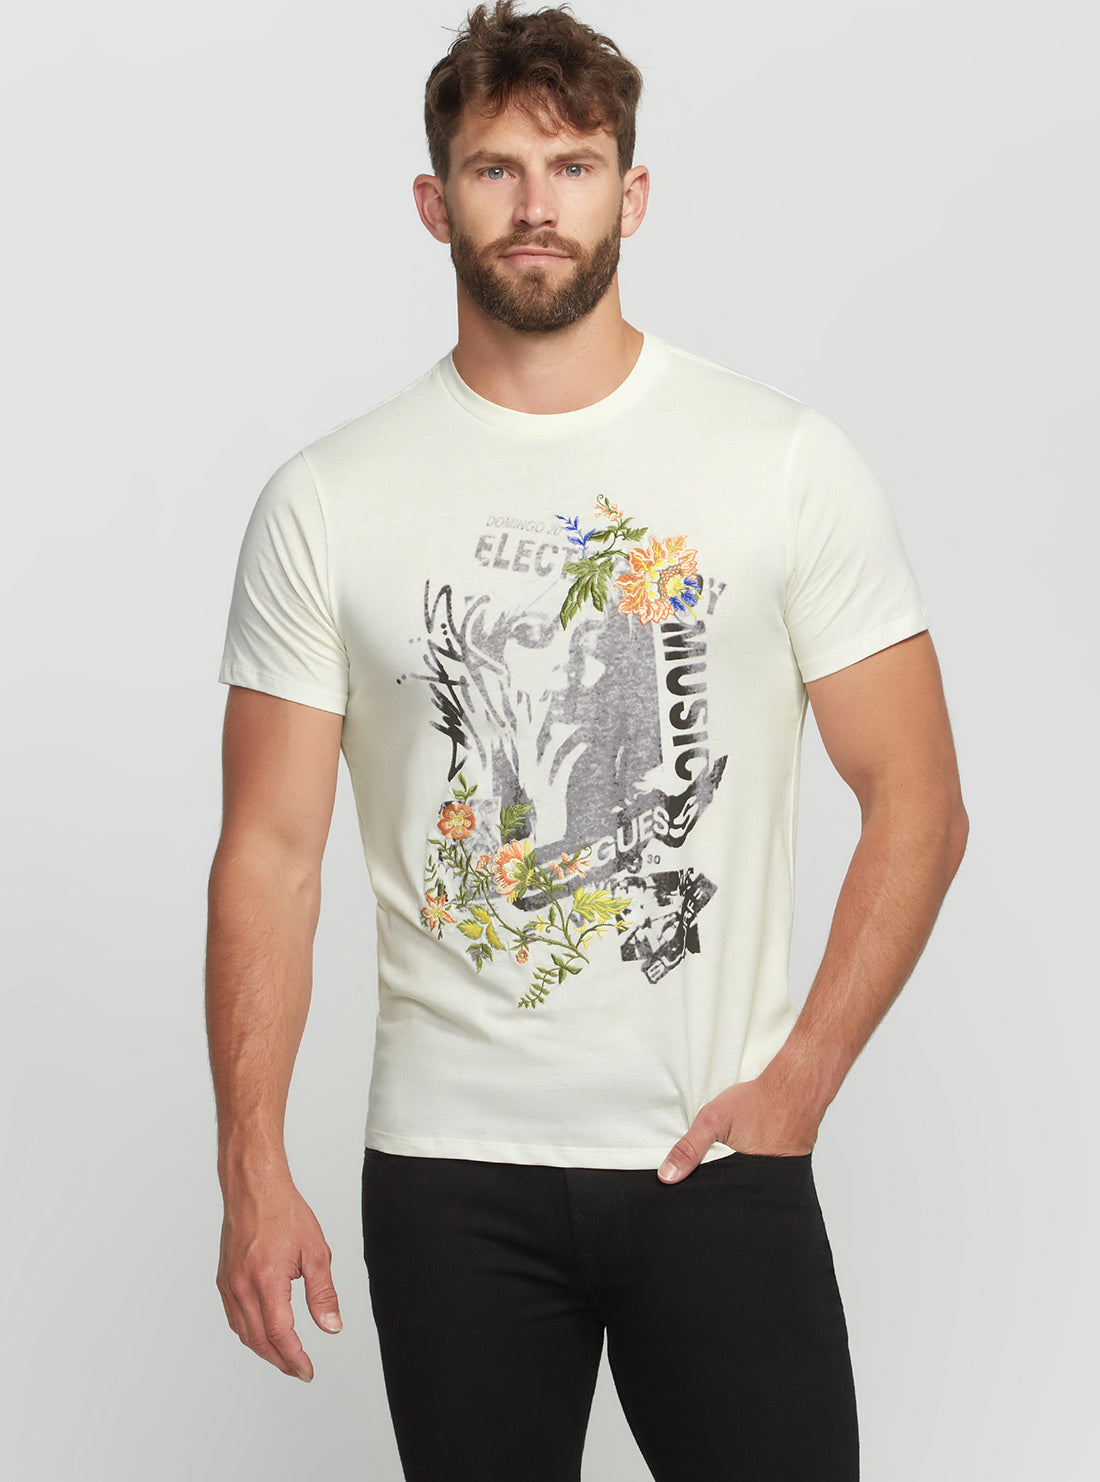 GUESS Men's Eco White Electric Music T-Shirt M2BI77K9RM3 Front View